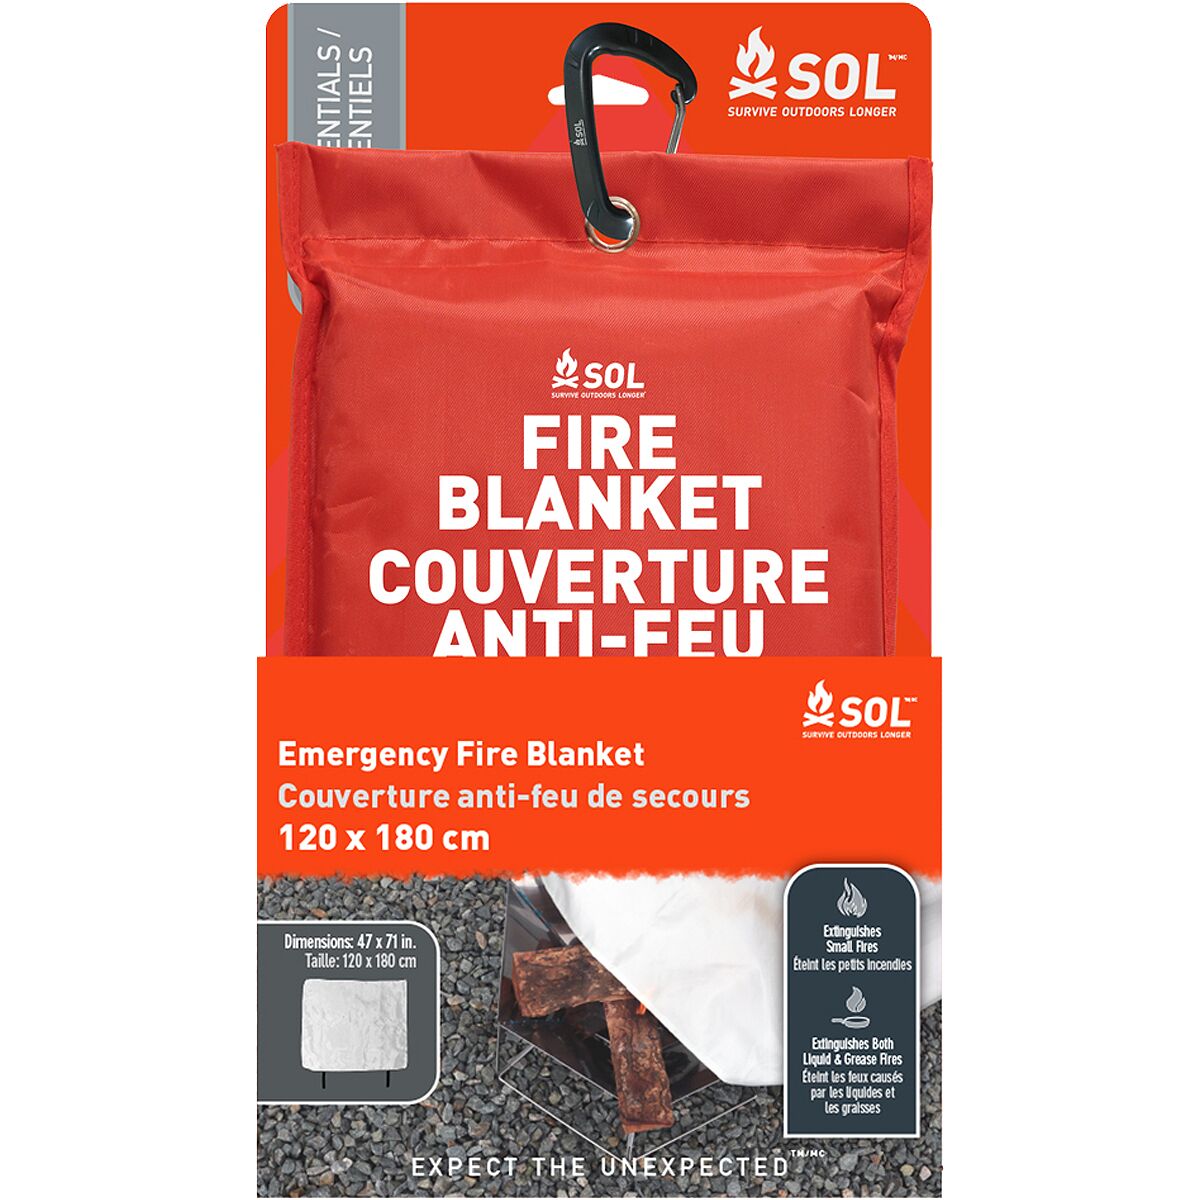 S.O.L Survive Outdoors Longer Emergency Fire Blanket